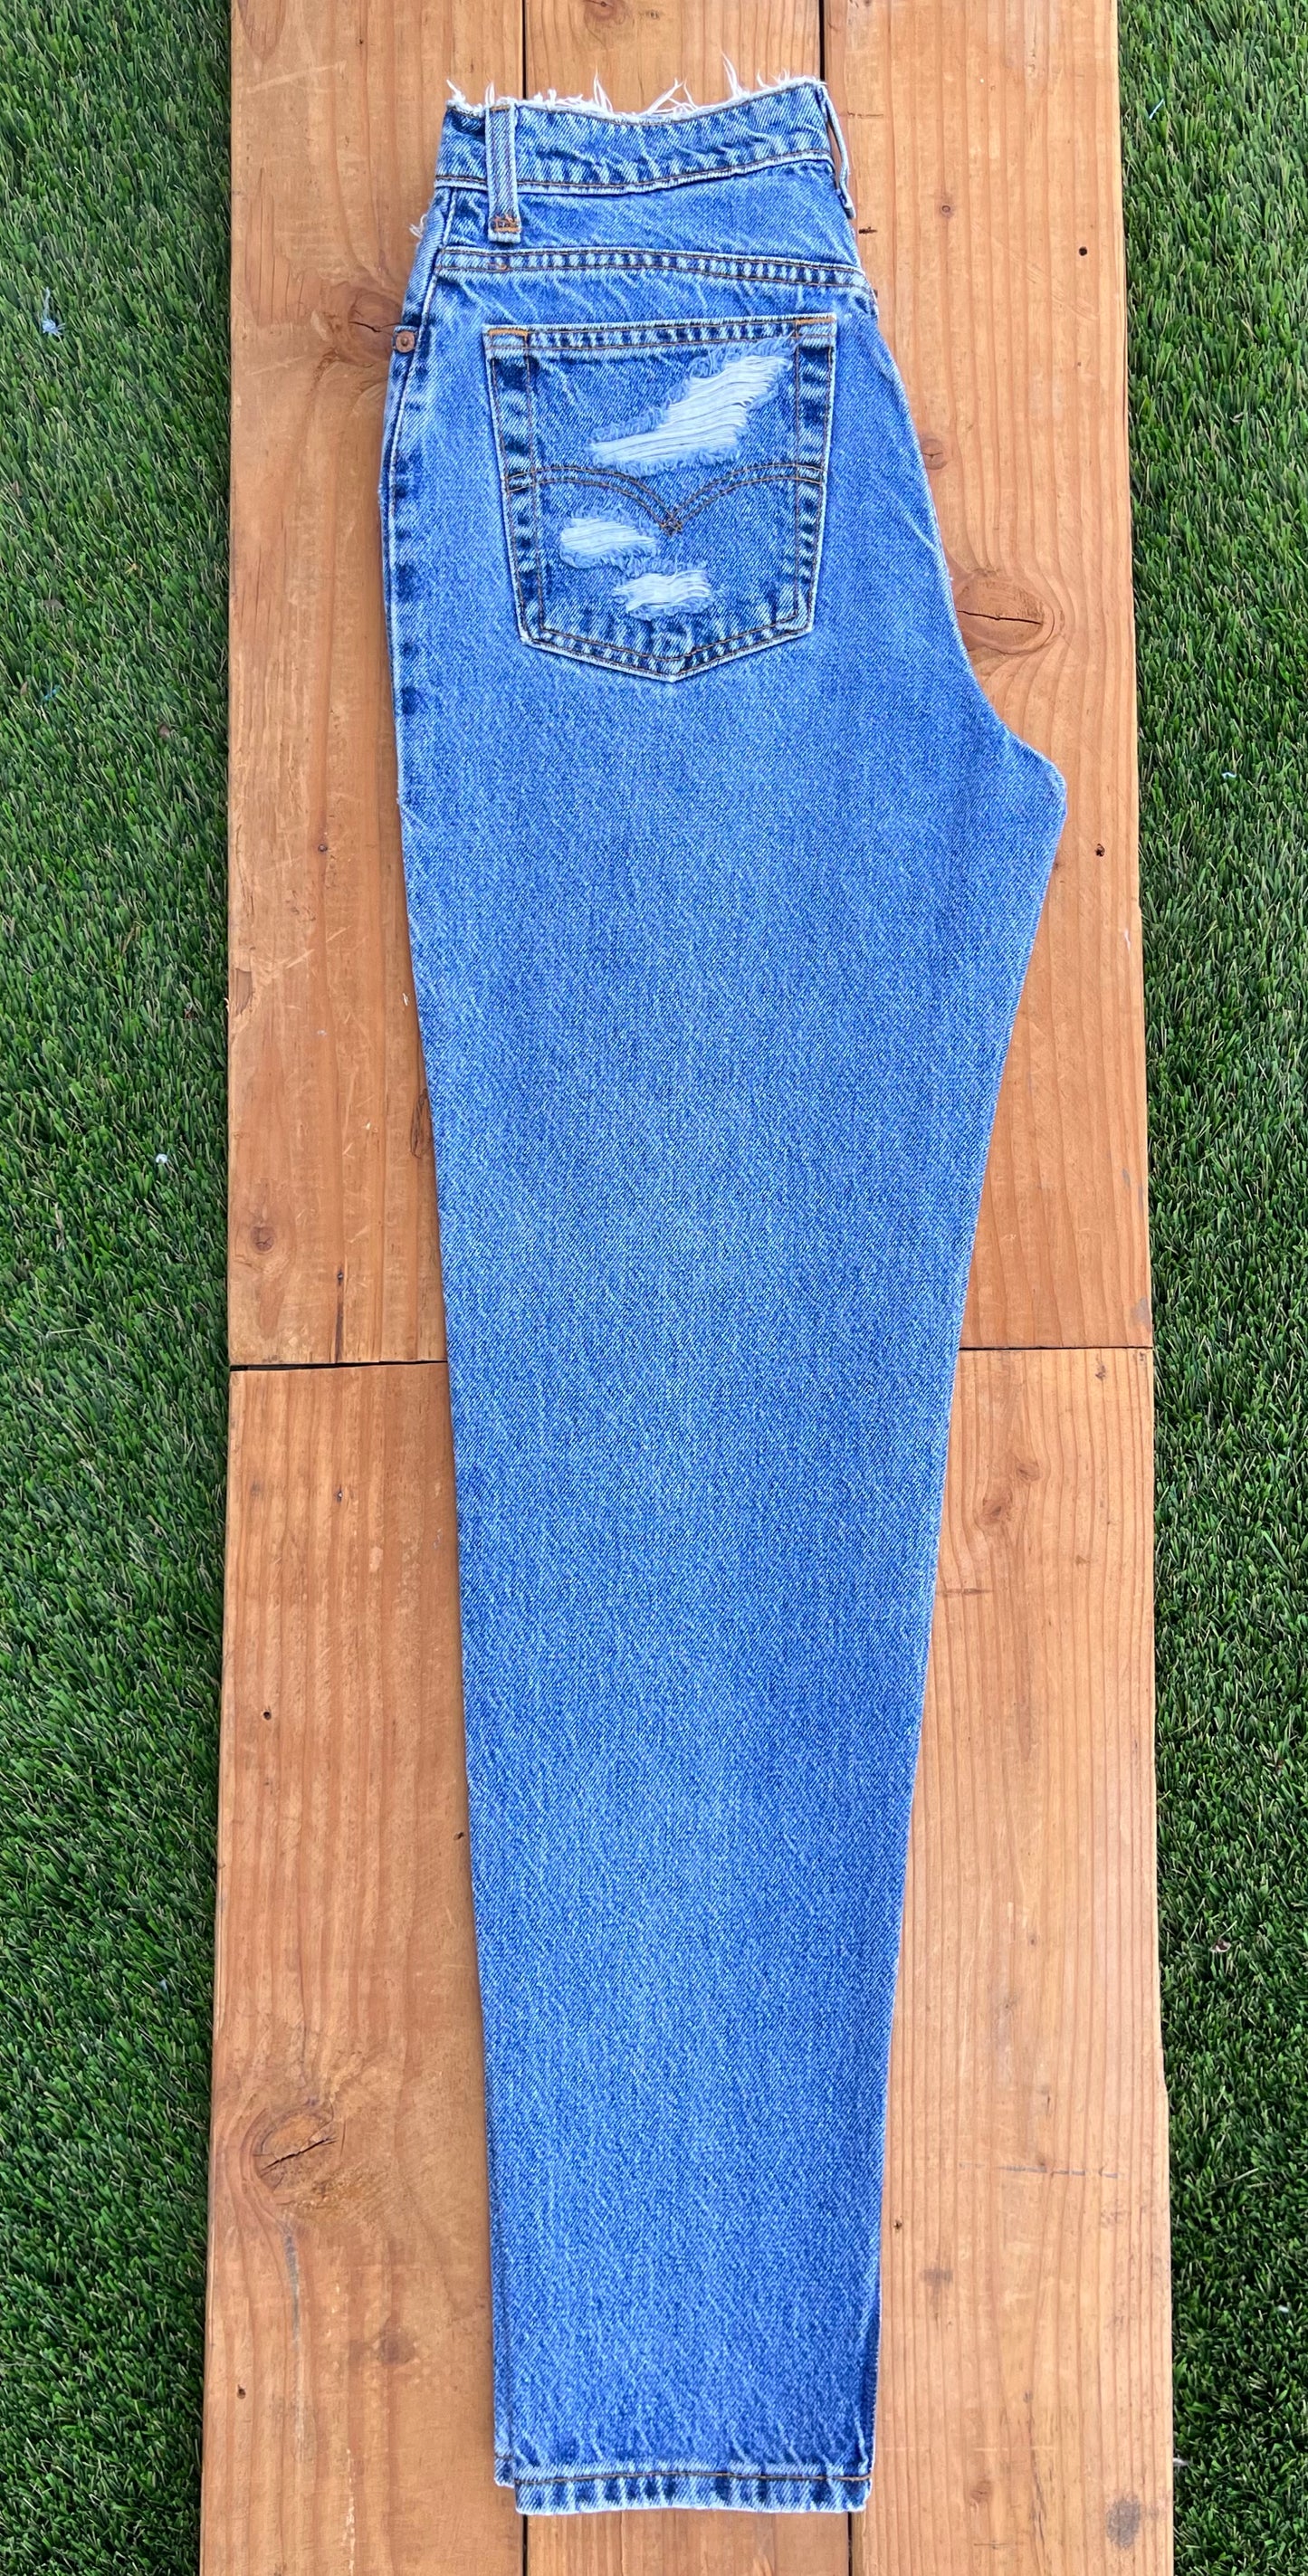 W28 512 Vintage Levi's Jean